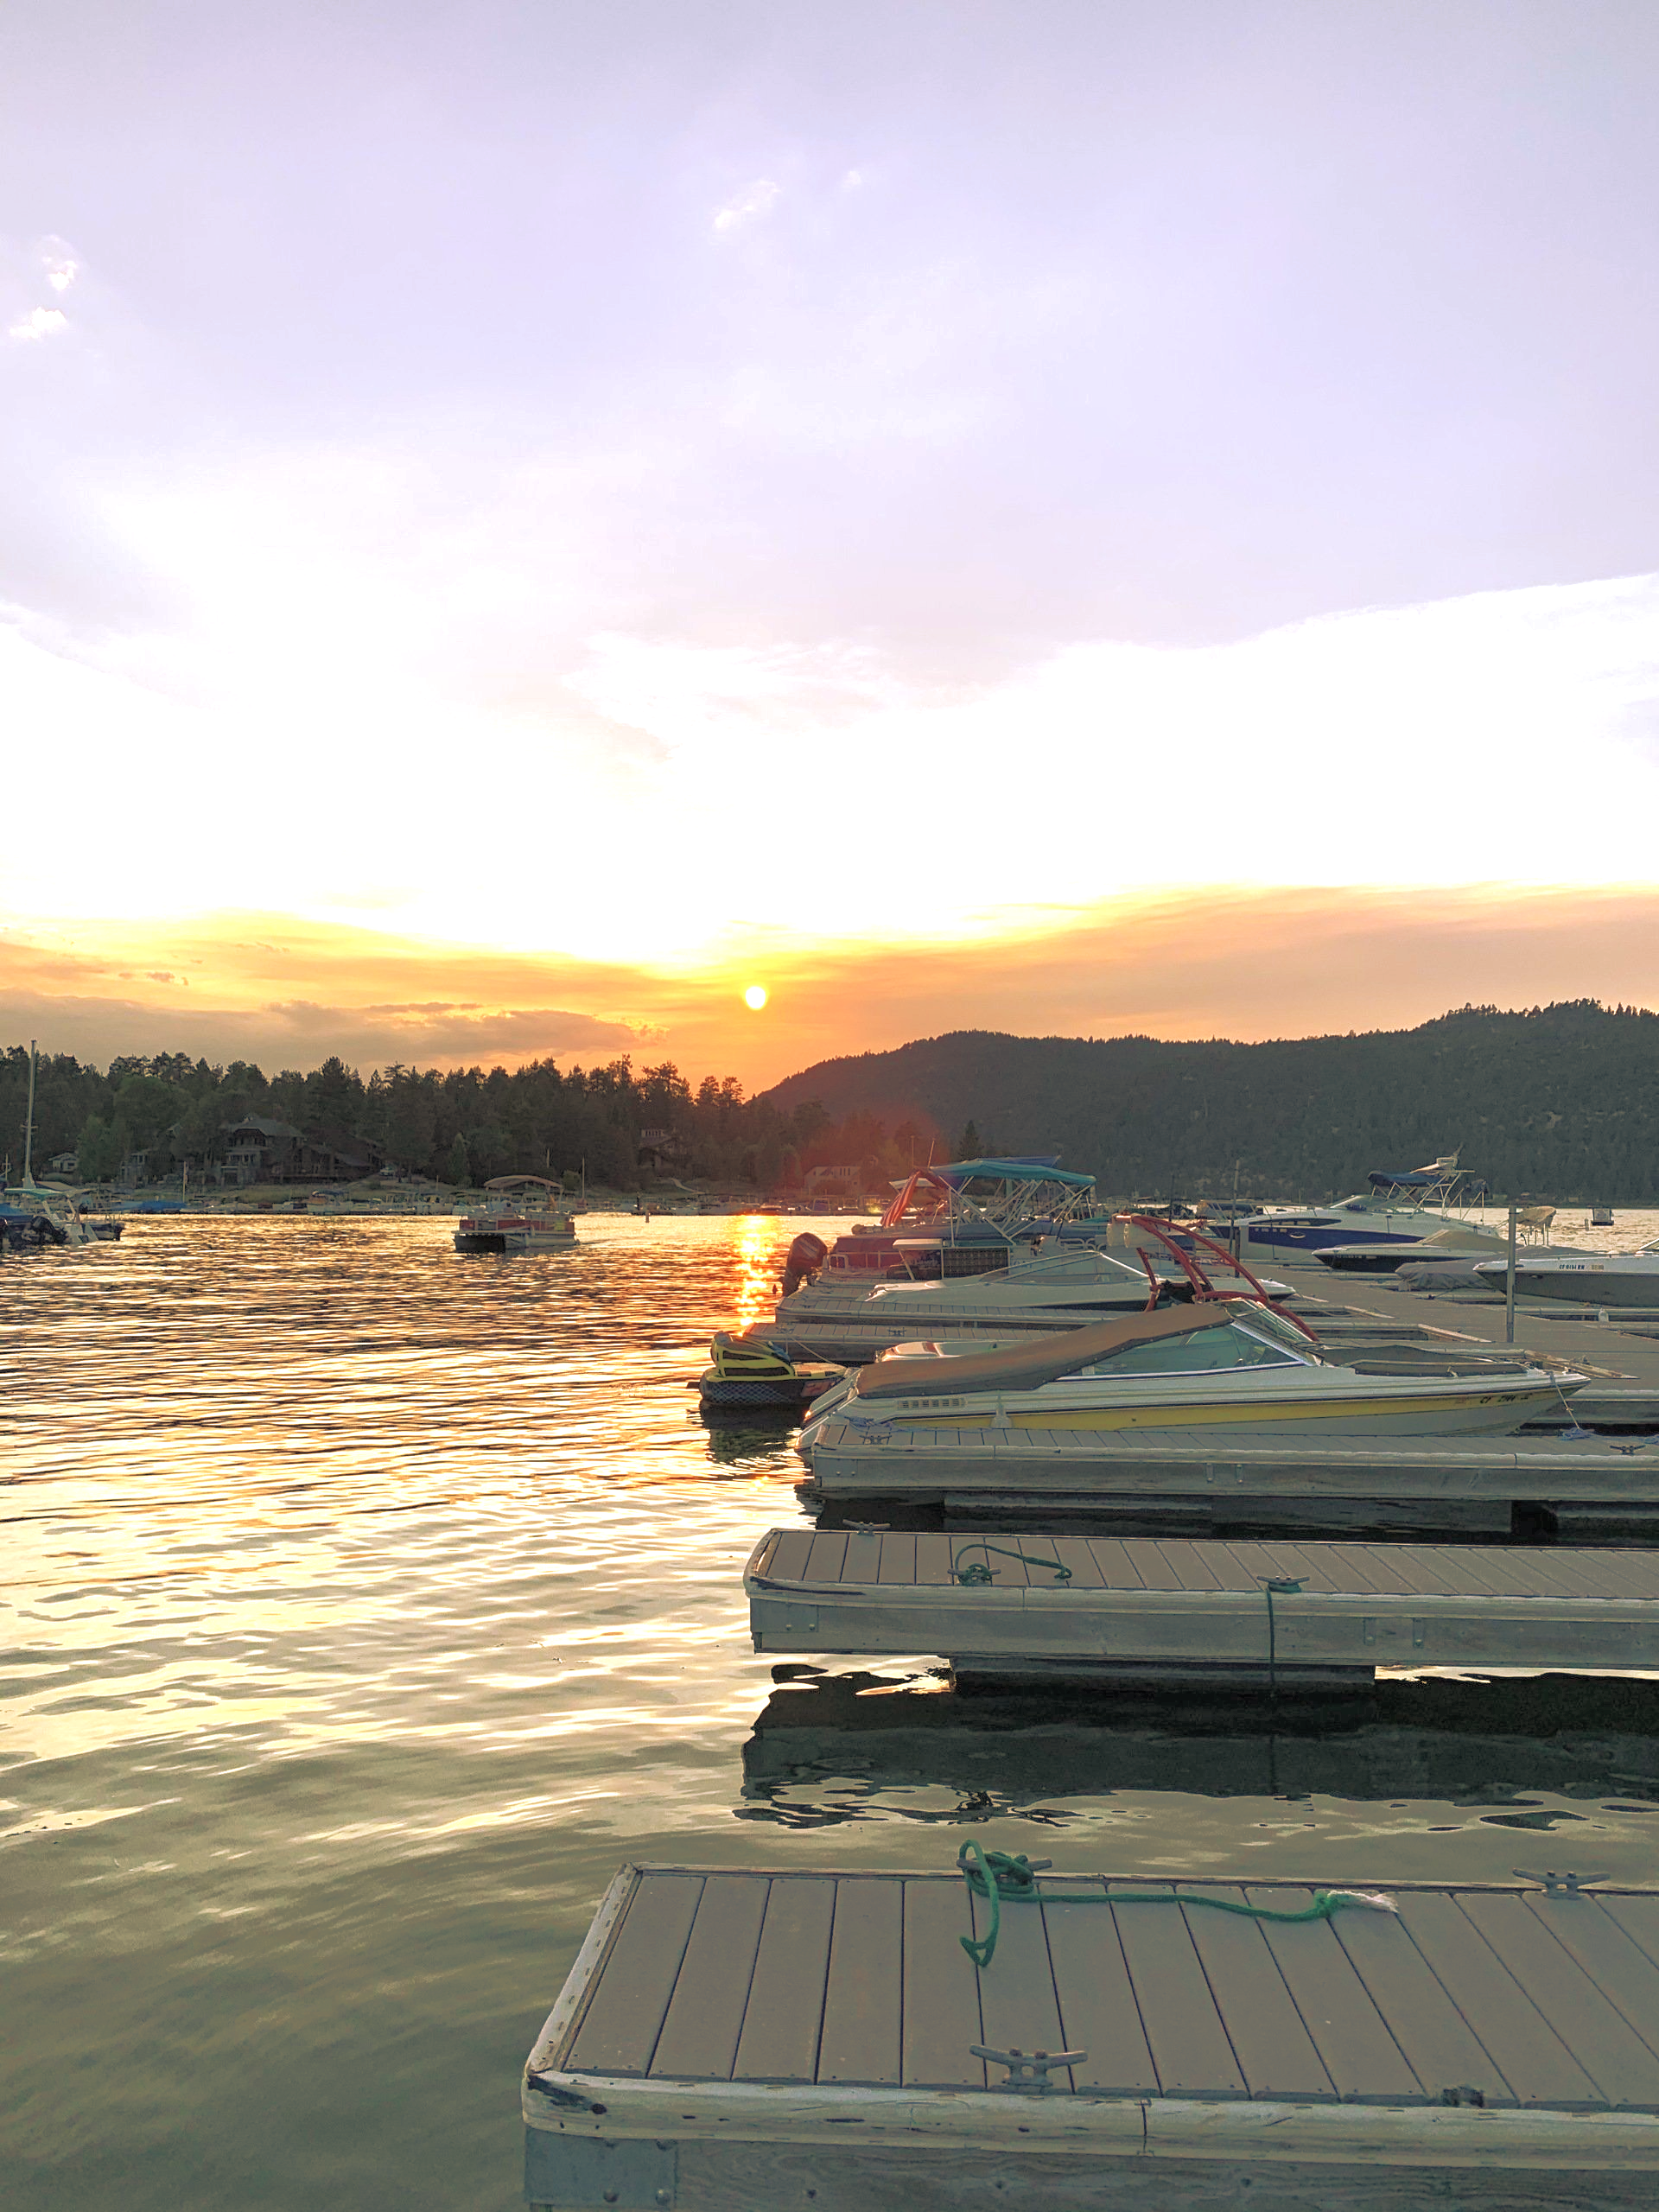 Boat slip on lake during the sunset